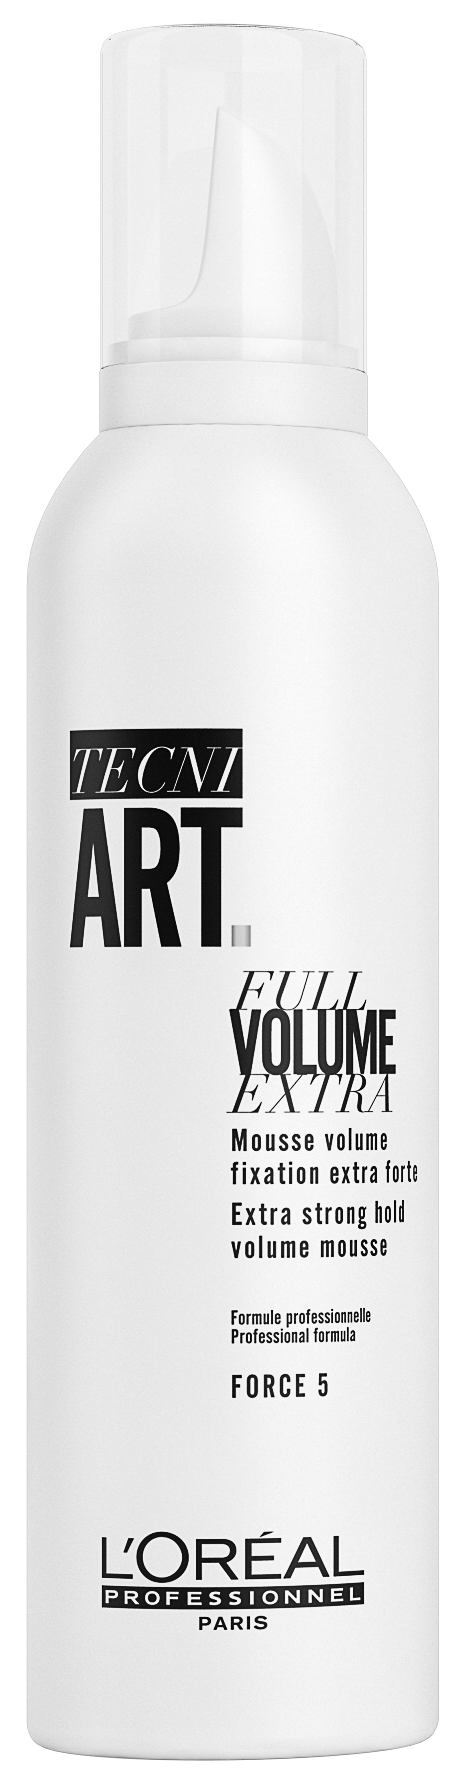 Мусс Tecni.Art Full Volume Extra для  экстра-объёма и супер фиксации тонких волос, 250 мл